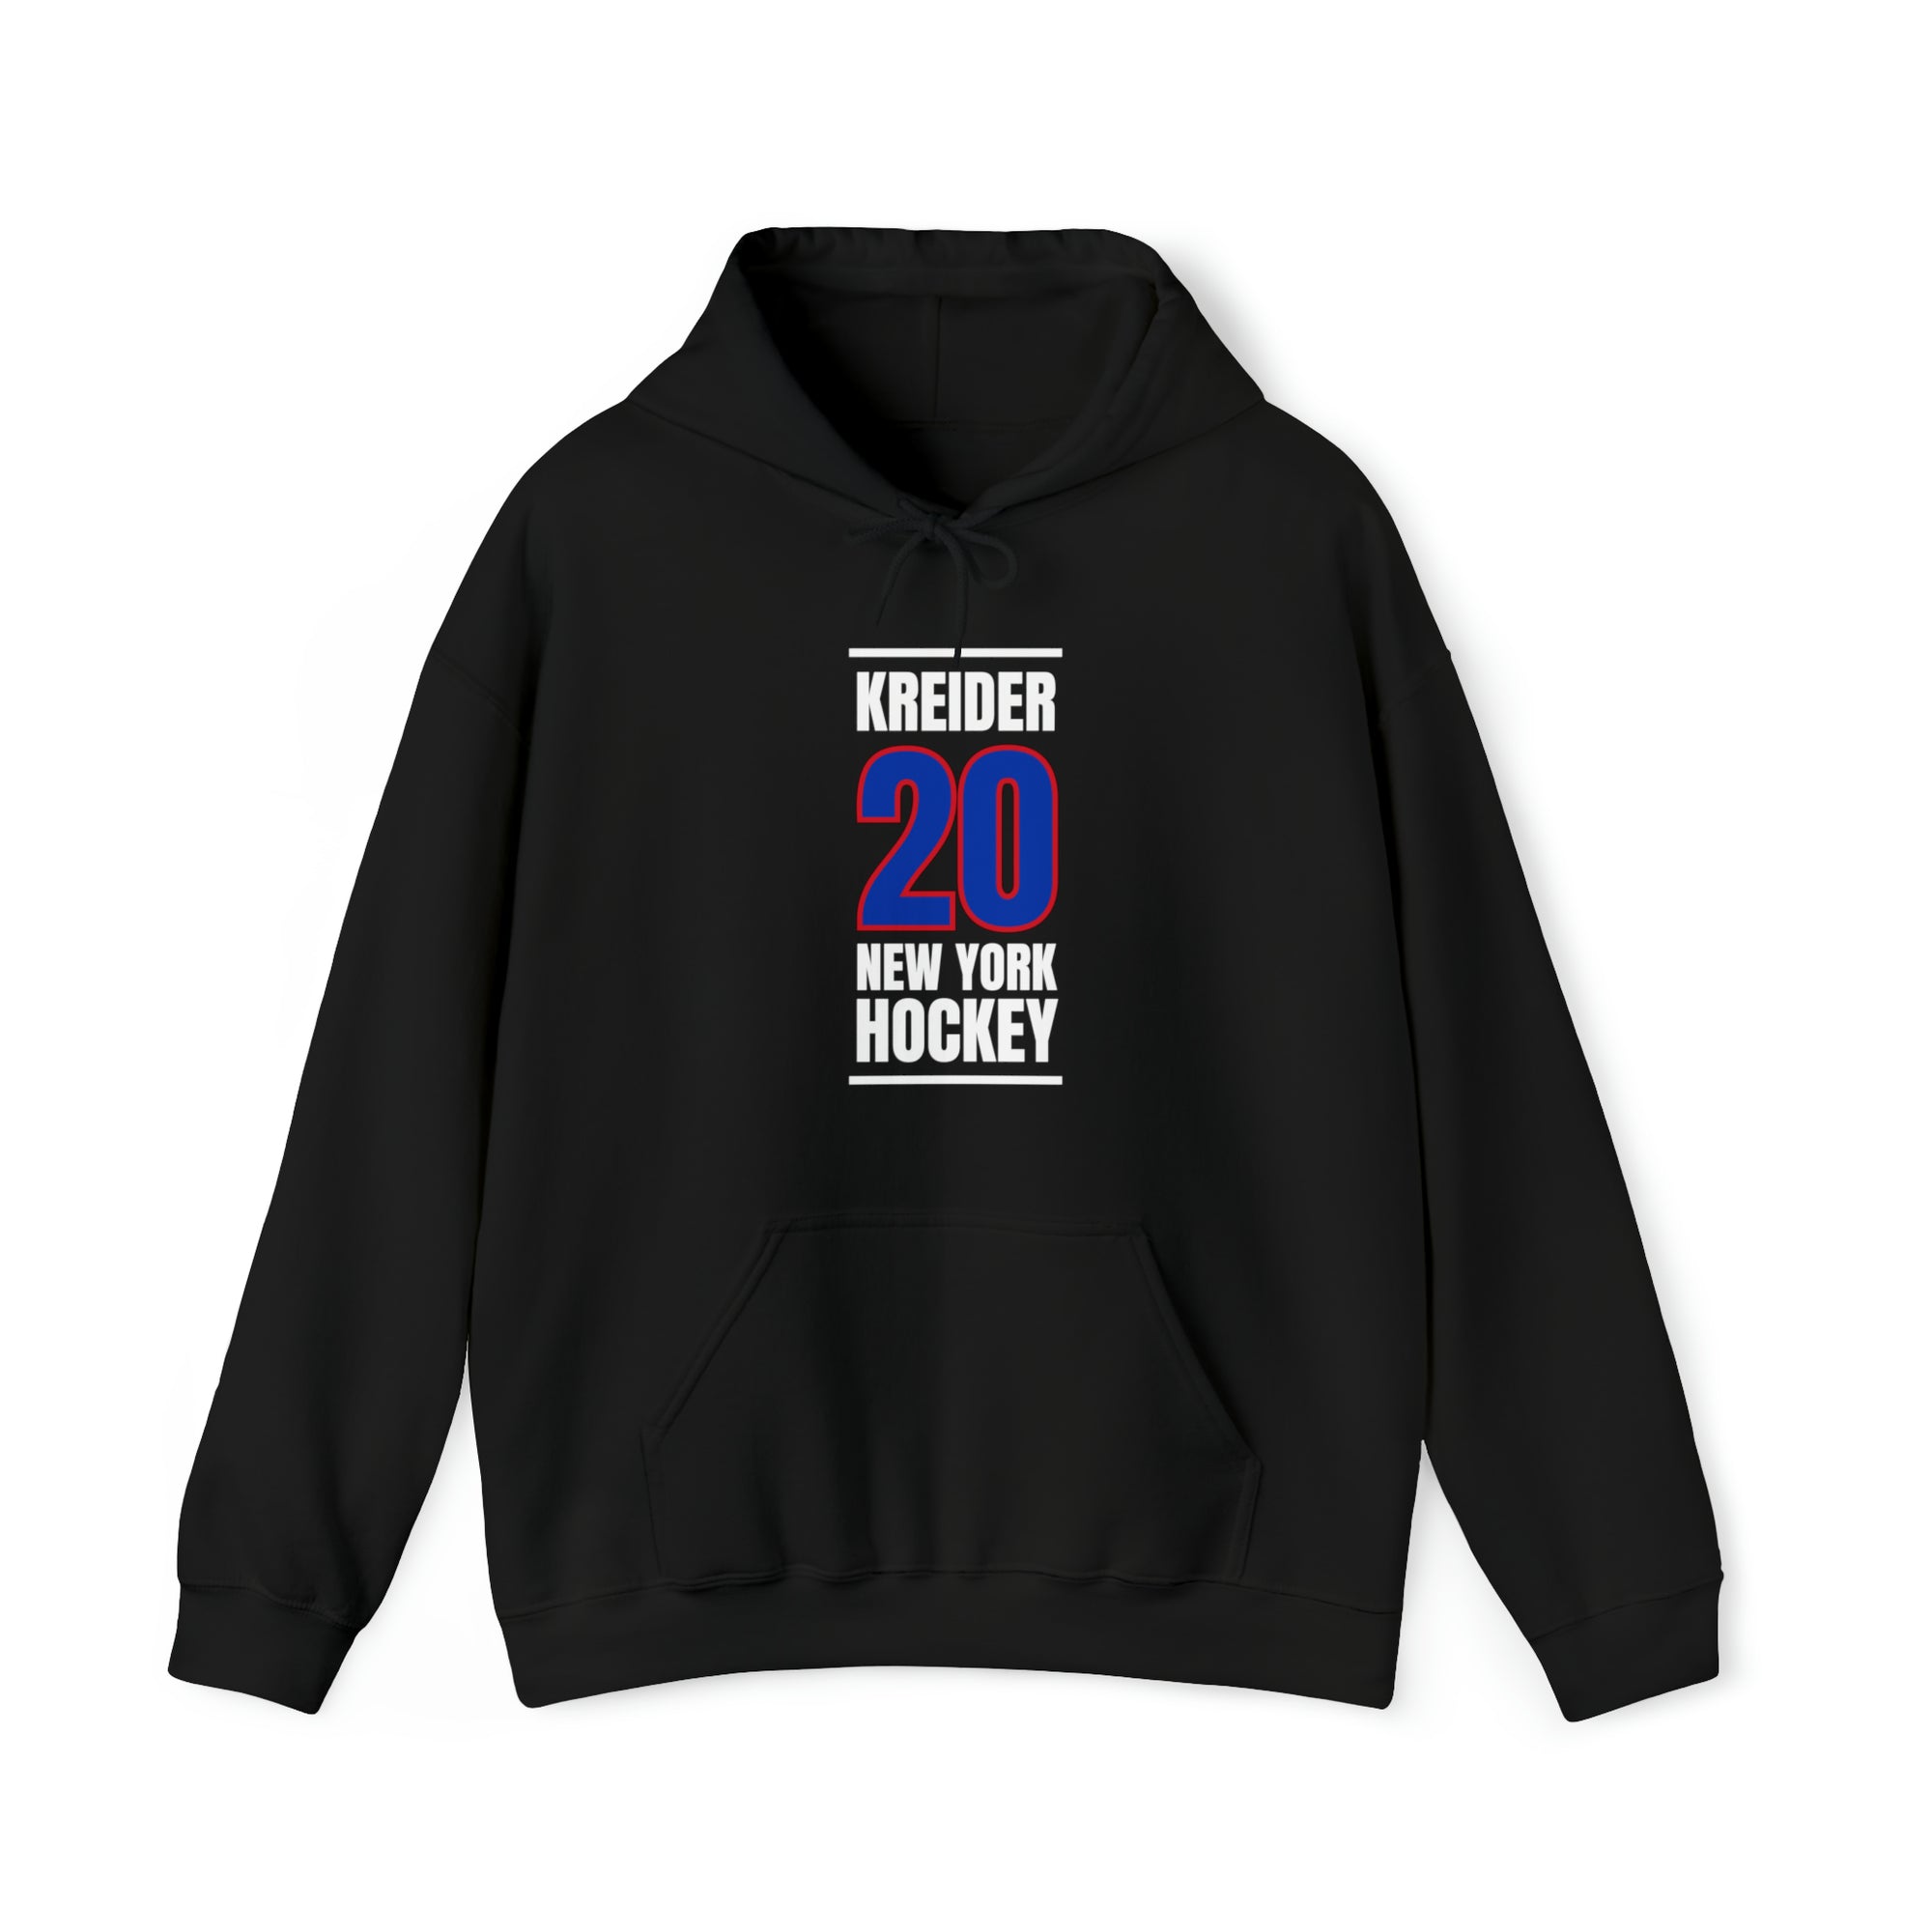 Kreider 20 New York Hockey Royal Blue Vertical Design Unisex Hooded Sweatshirt